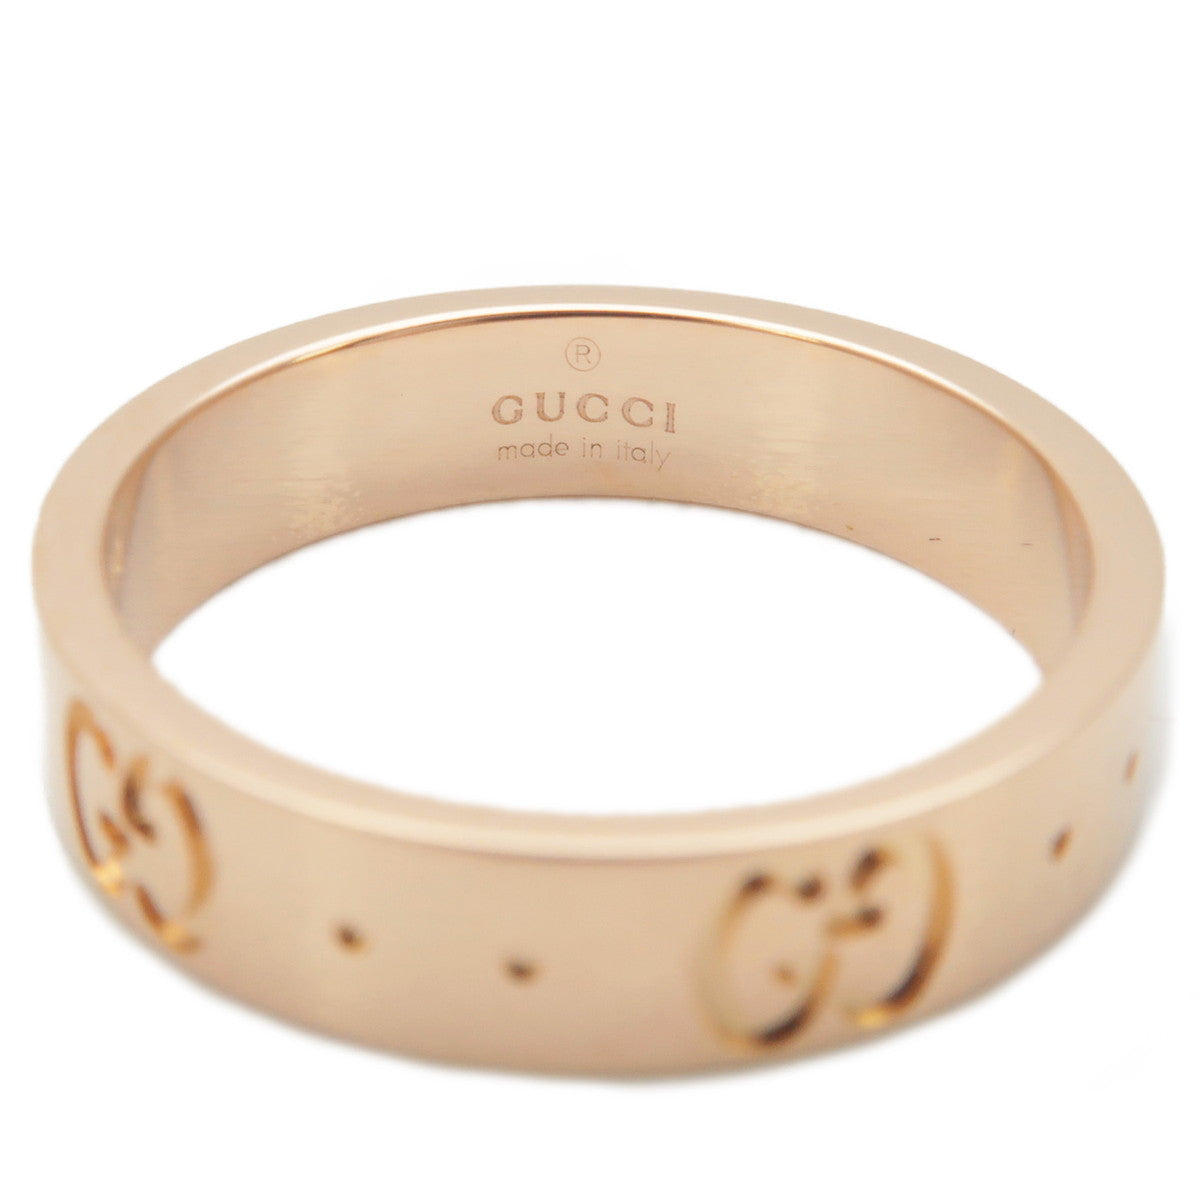 GUCCI ICON Ring K18 PG 750 Rose Gold #9 US4.5-5.0 HK10.5 EU49